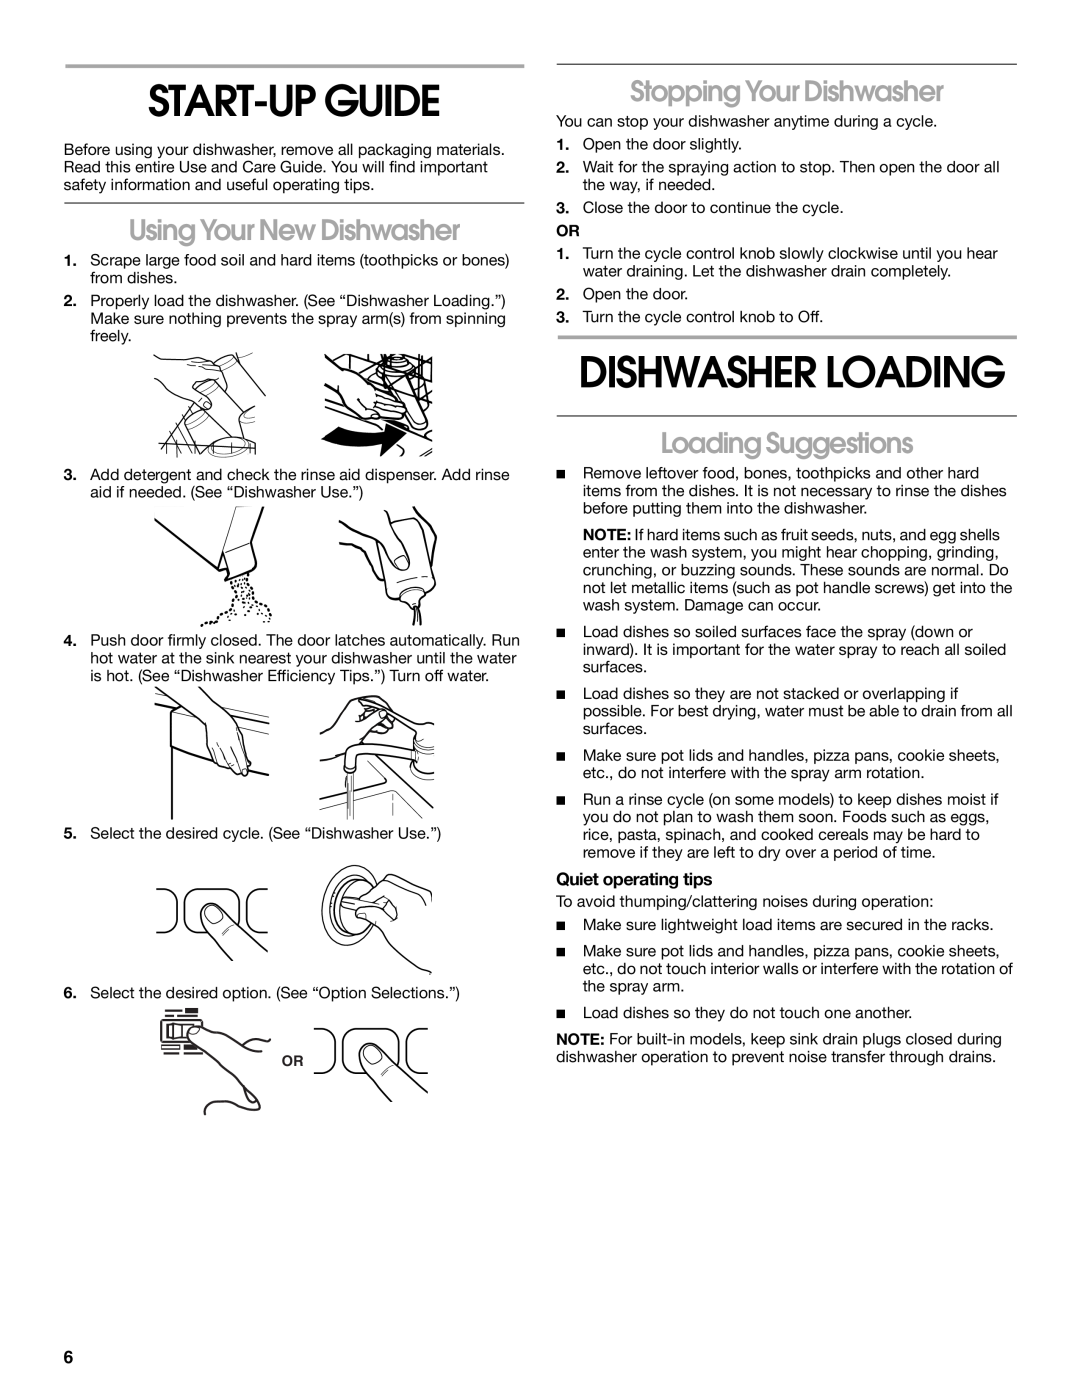 Whirlpool RUD4000 manual Start-Up Guide, Dishwasher Loading, Using Your New Dishwasher, Stopping Your Dishwasher 